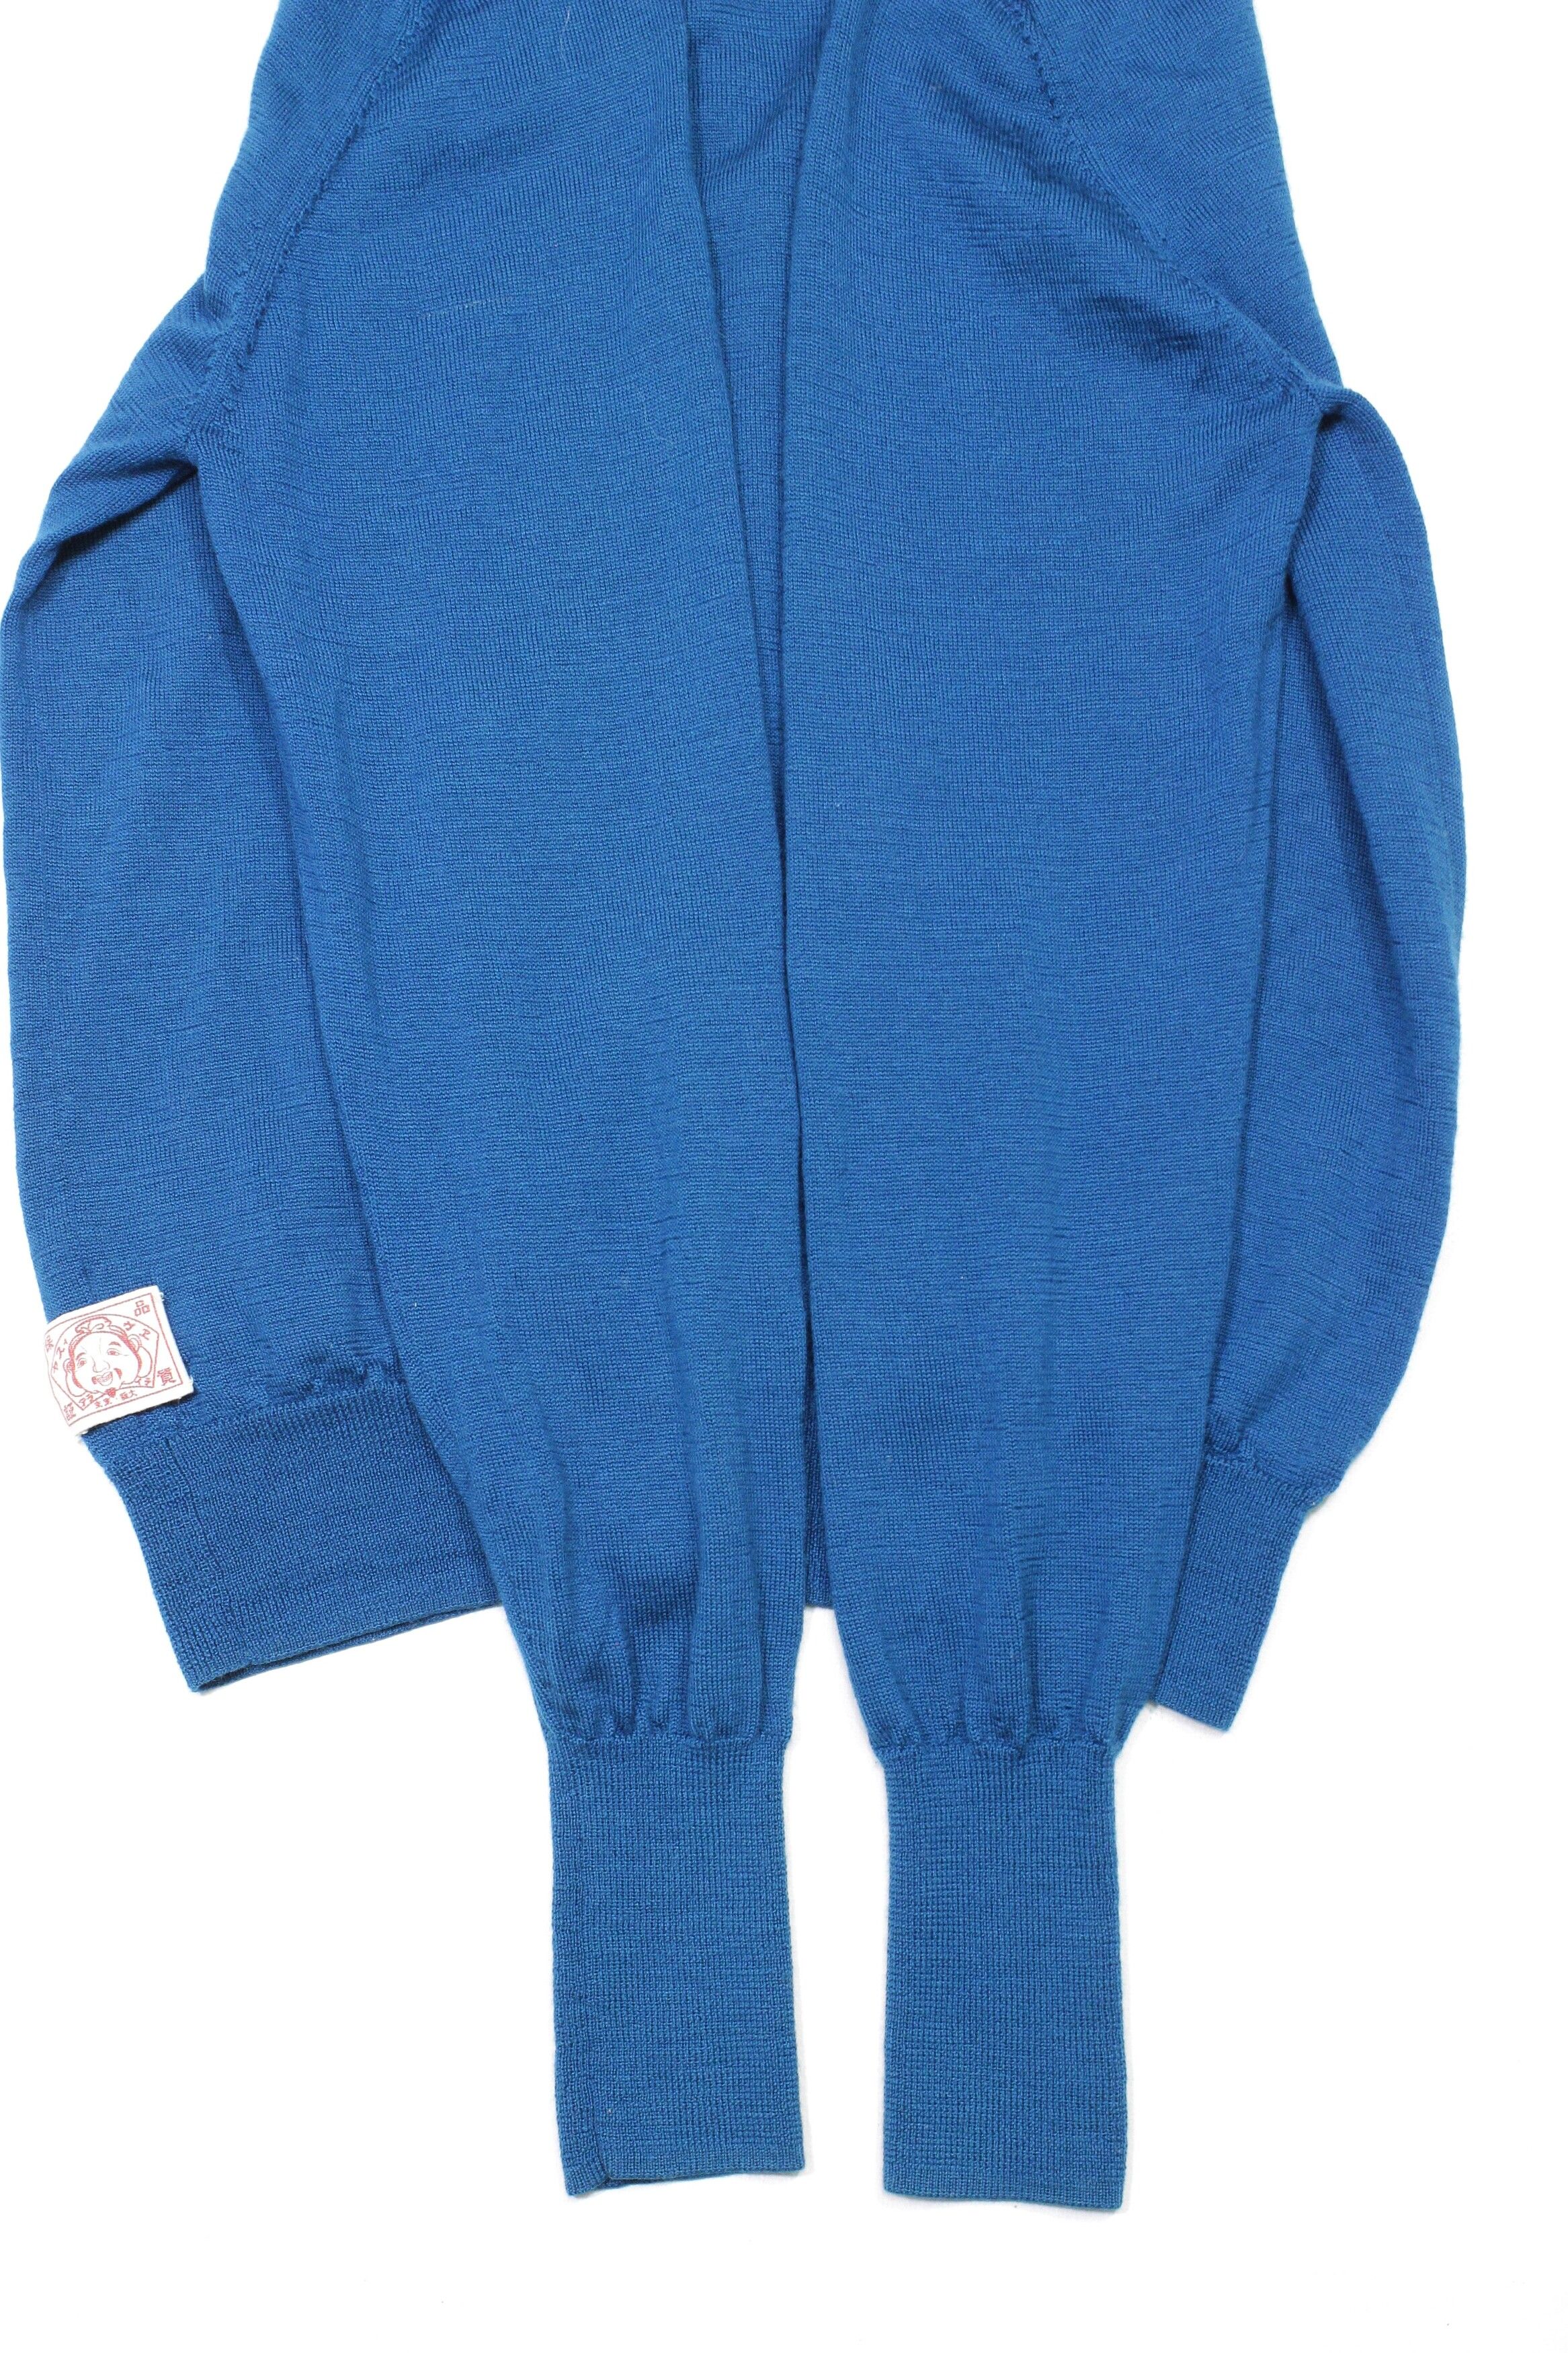 Evisu Wool Cardigan Size US XL / EU 56 / 4 - 6 Thumbnail